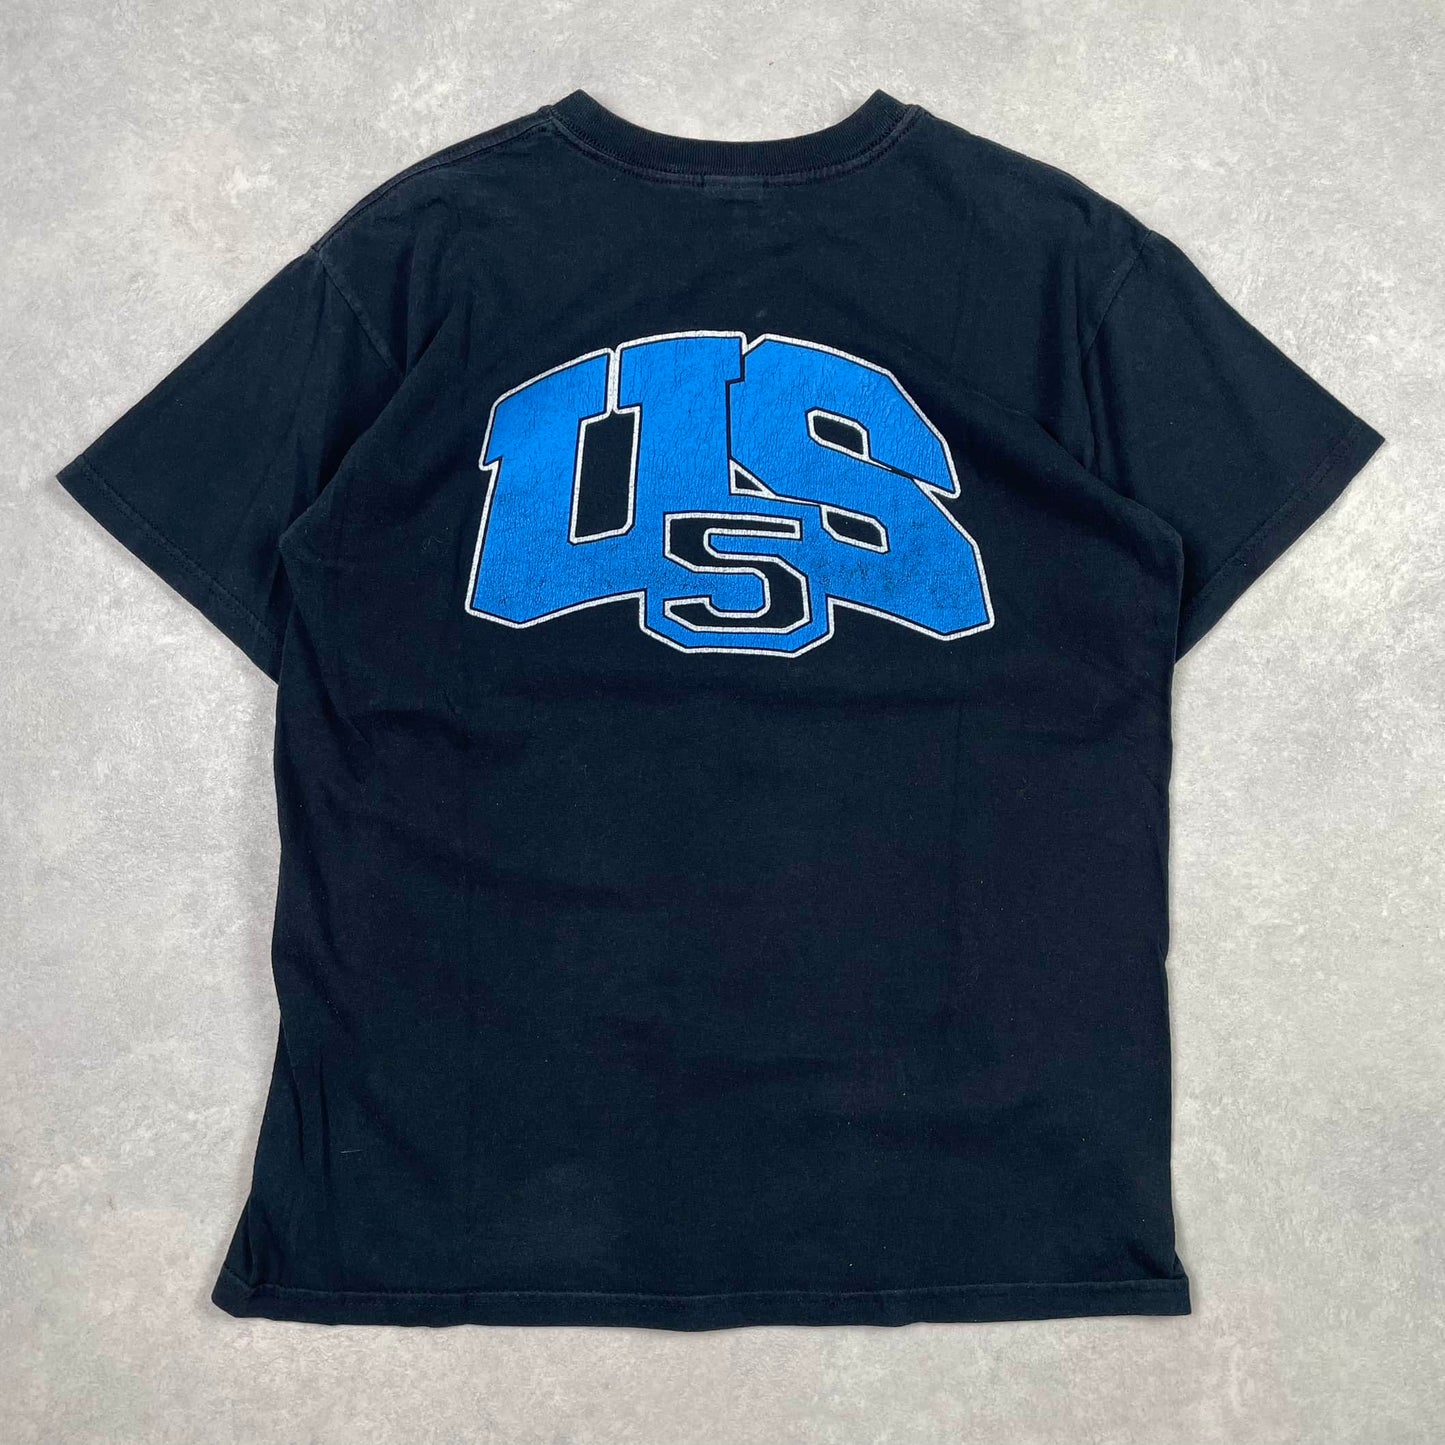 US5 Band T-Shirt Black 00’s